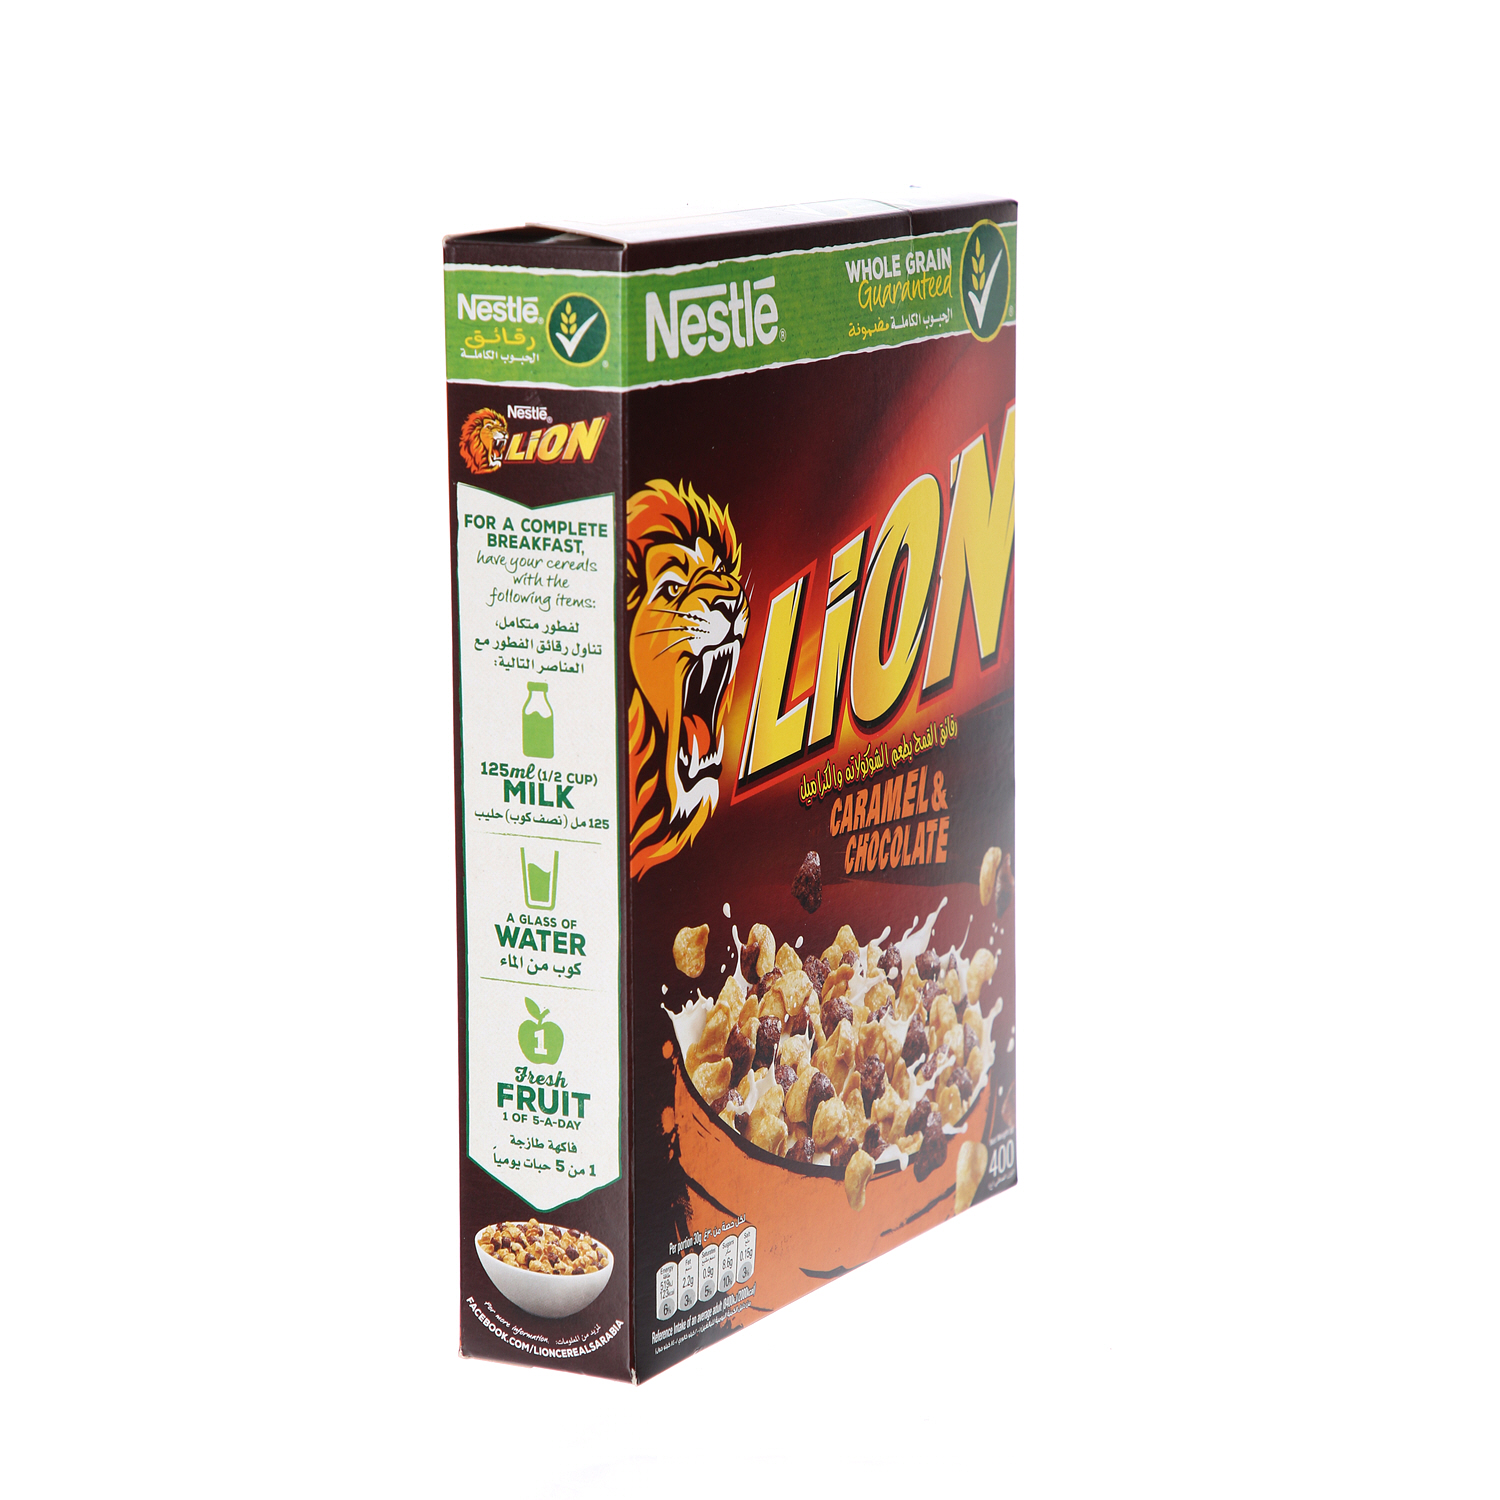 Nestlé Lion Corn Flakes Caramel & Chocolate 400 g